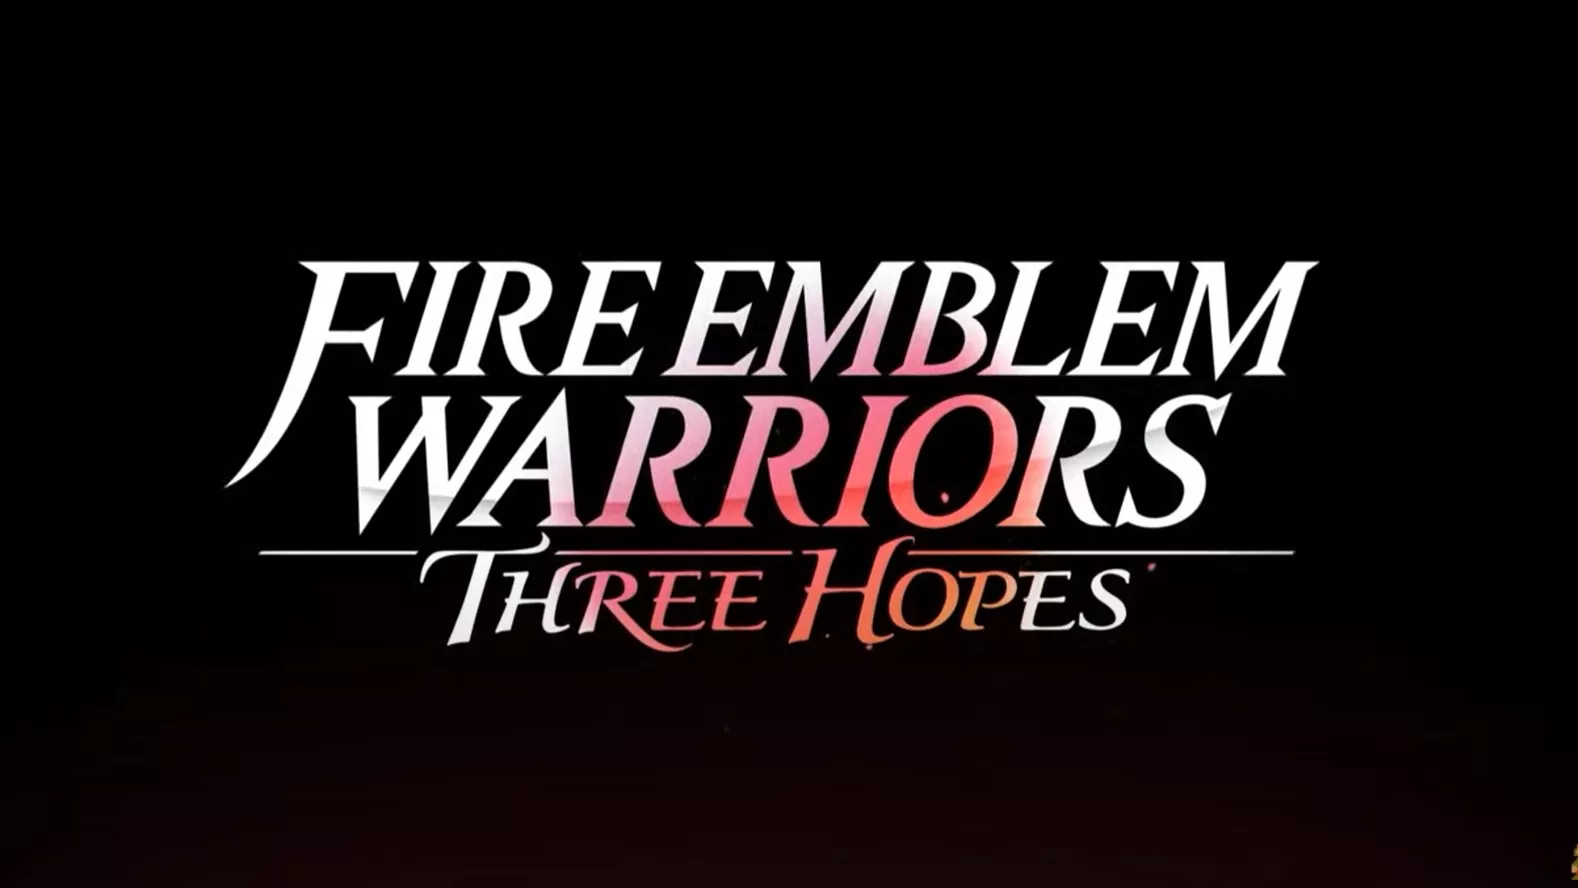 Fire Emblem Warriors: Three Hopes adaptiert das letzte Fire Emblem als Warriors-Teil Heropic